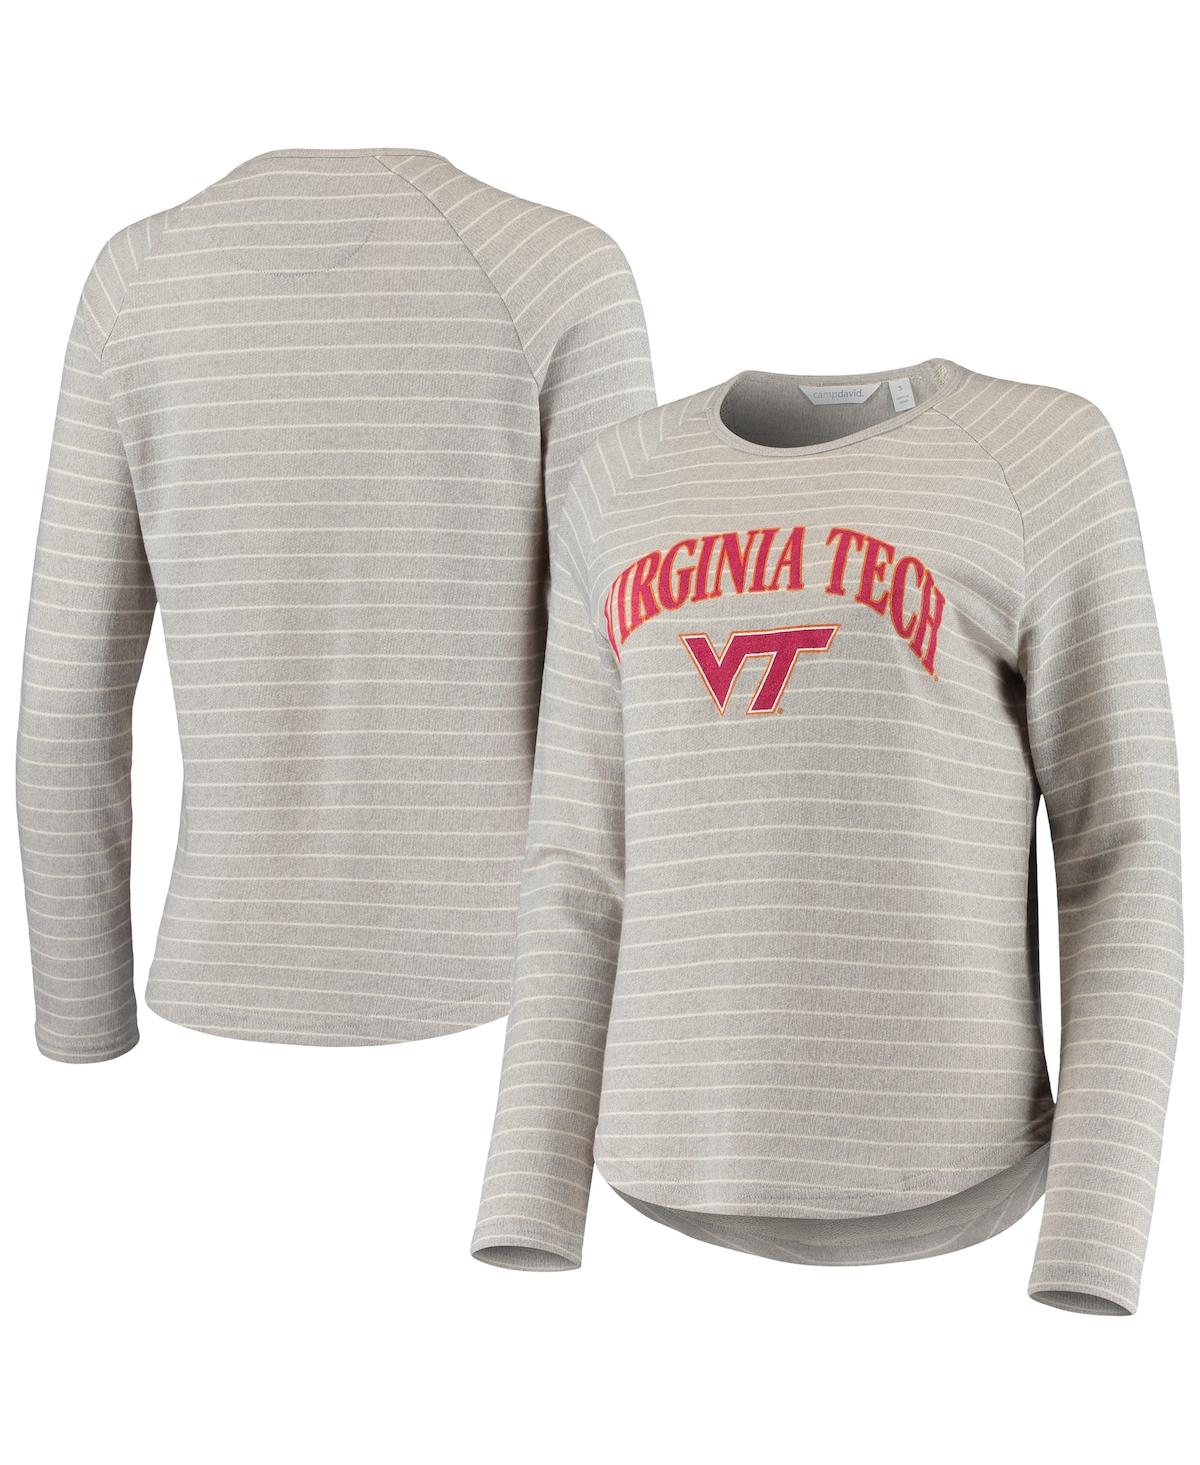 Women's Heathered Gray Virginia Tech Hokies Seaside Striped French Terry Raglan Pullover Sweatshirt - Heathered Gray